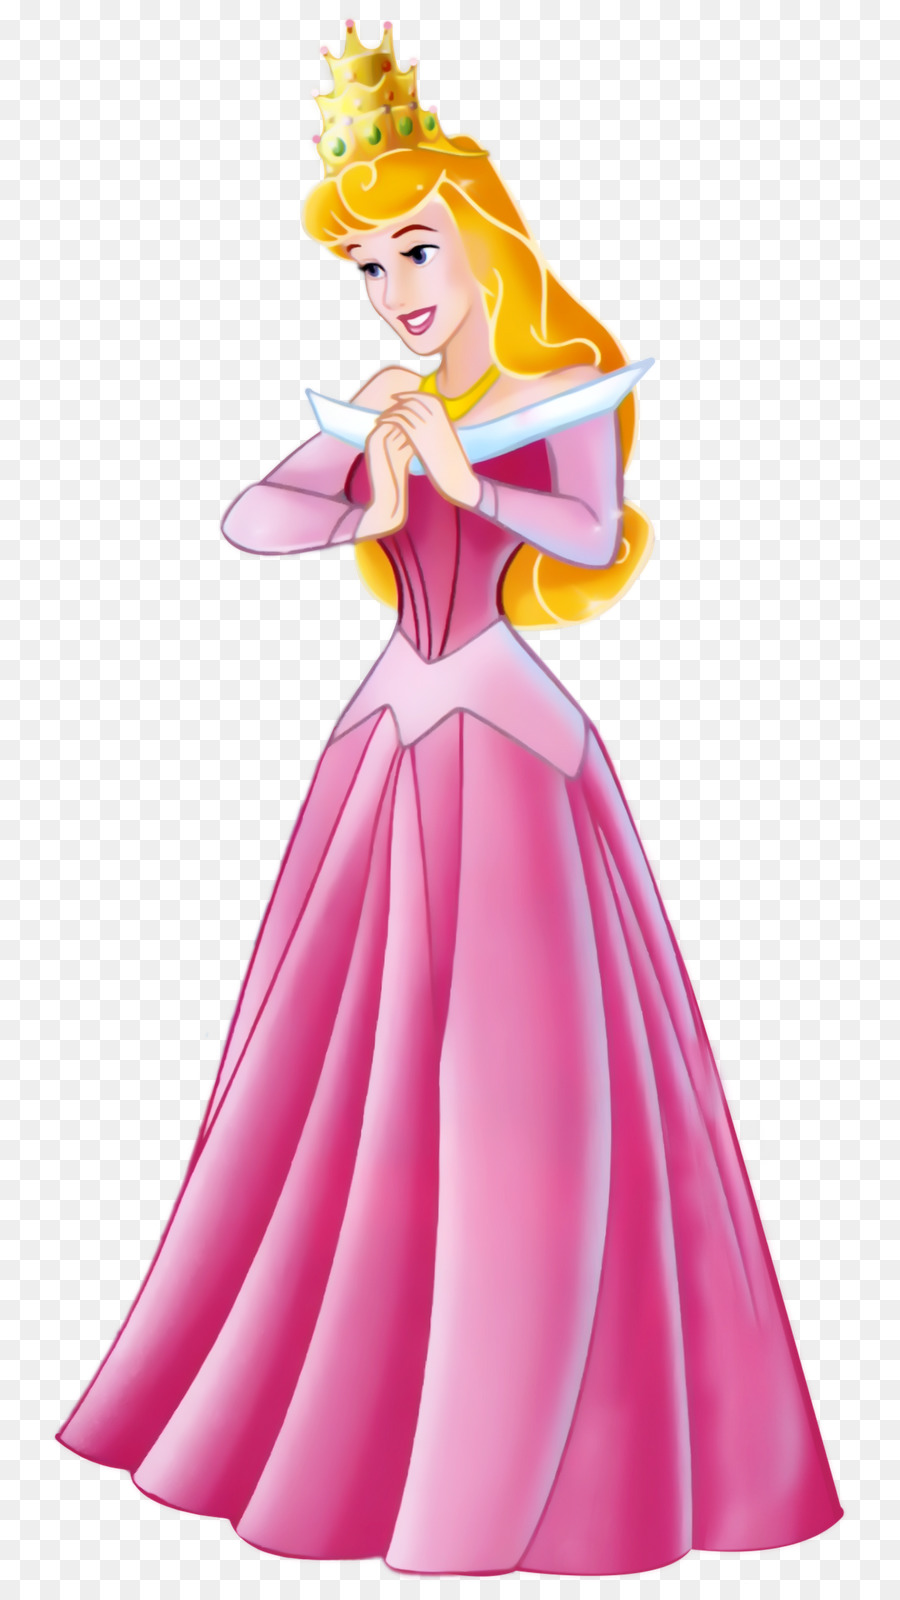 Princess Aurora Belle Ariel Disney Princess The Walt Disney Company - Cinderella png download - 864*1600 - Free Transparent Princess Aurora png Download.